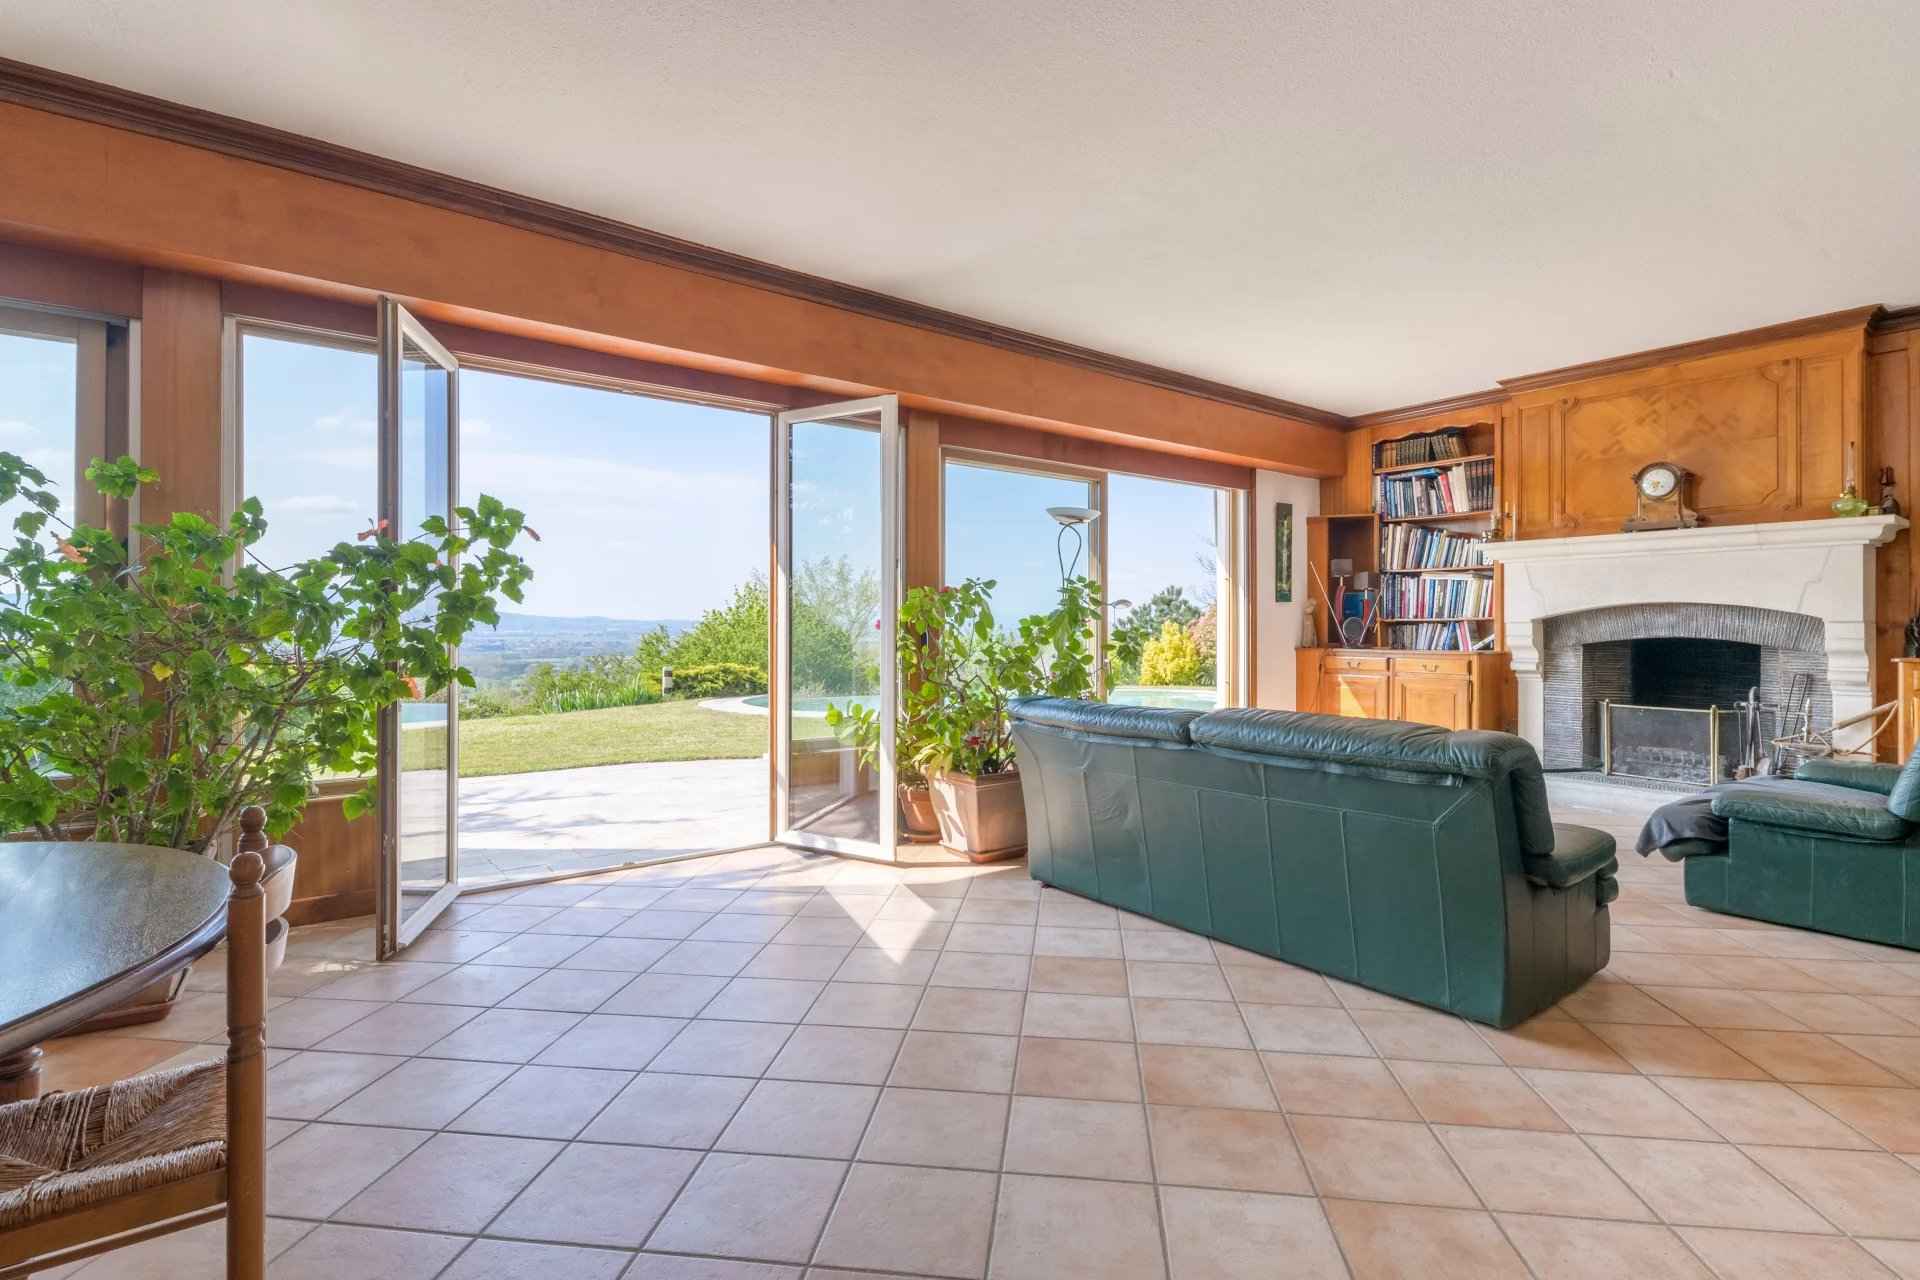 Barnes Lyon, prestigious real estate agency - Living room of a house in Trévoux